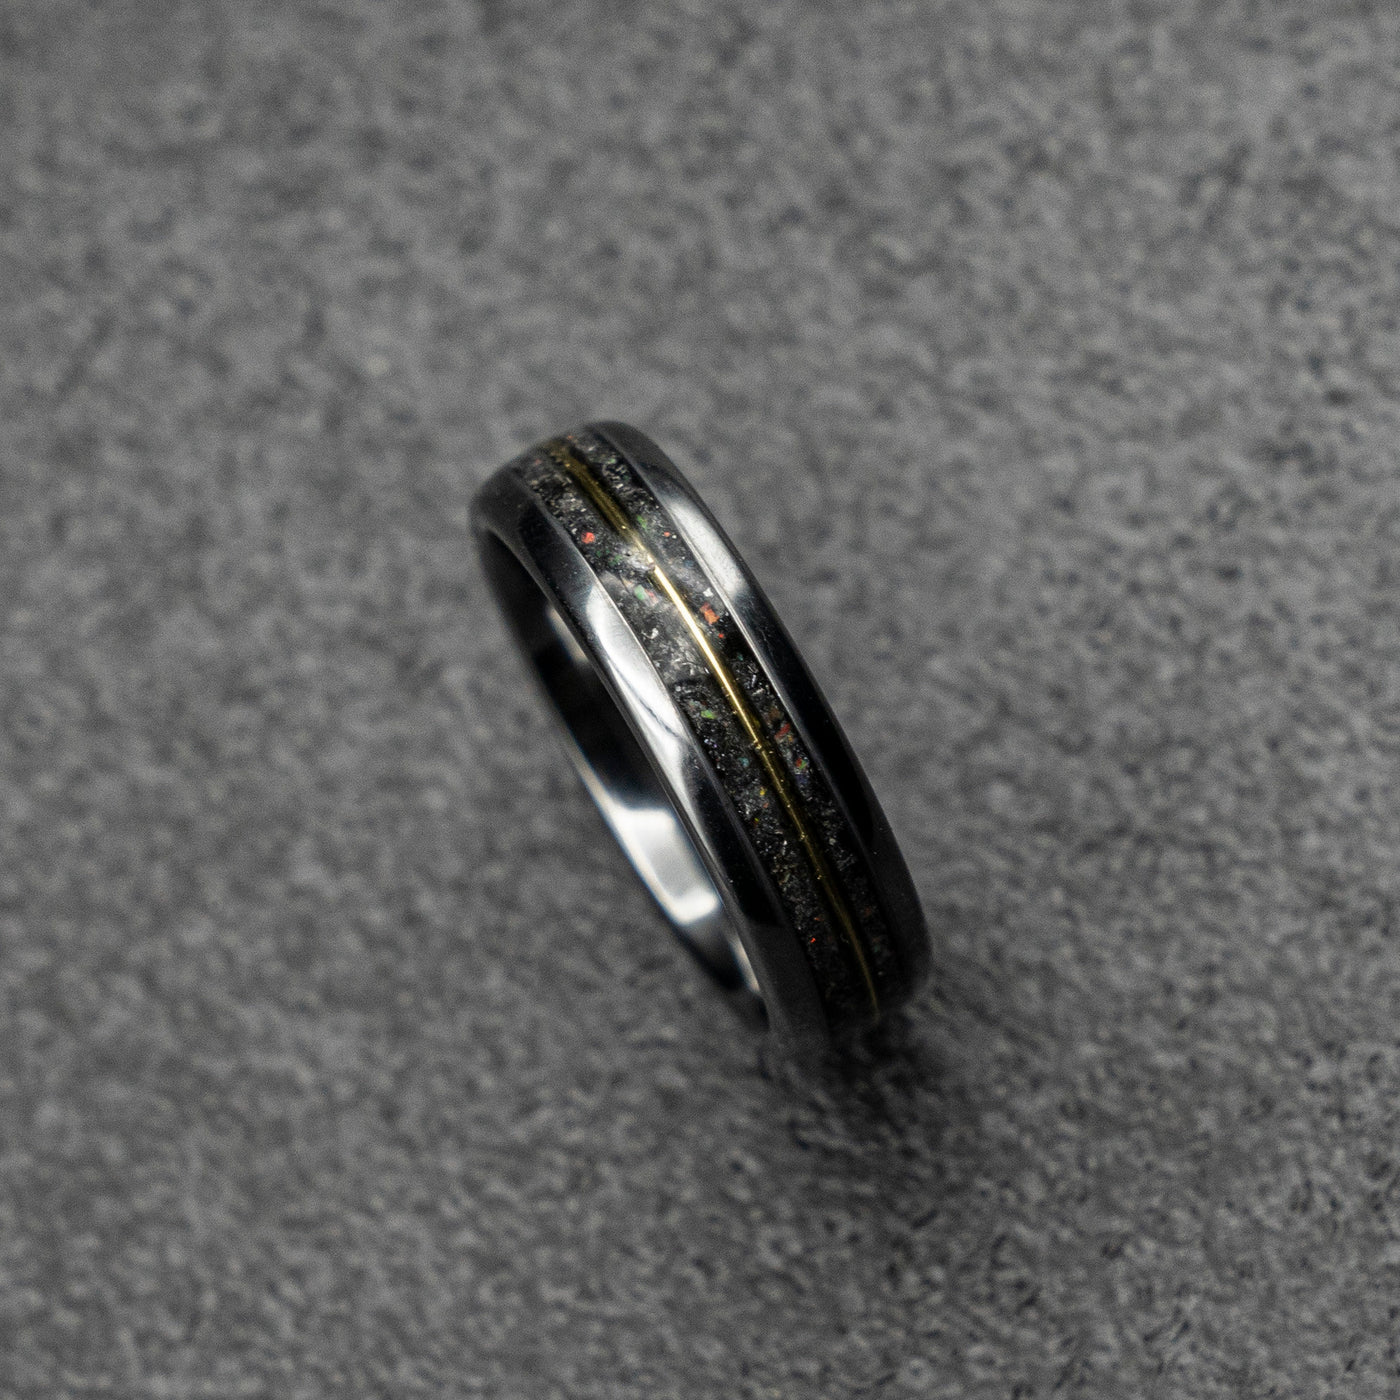 Black friday, meteorite ring, Glow in the dark ring, glow ring, Gold tungsten ring, tungsten ring men, mens wedding band, mens ring.